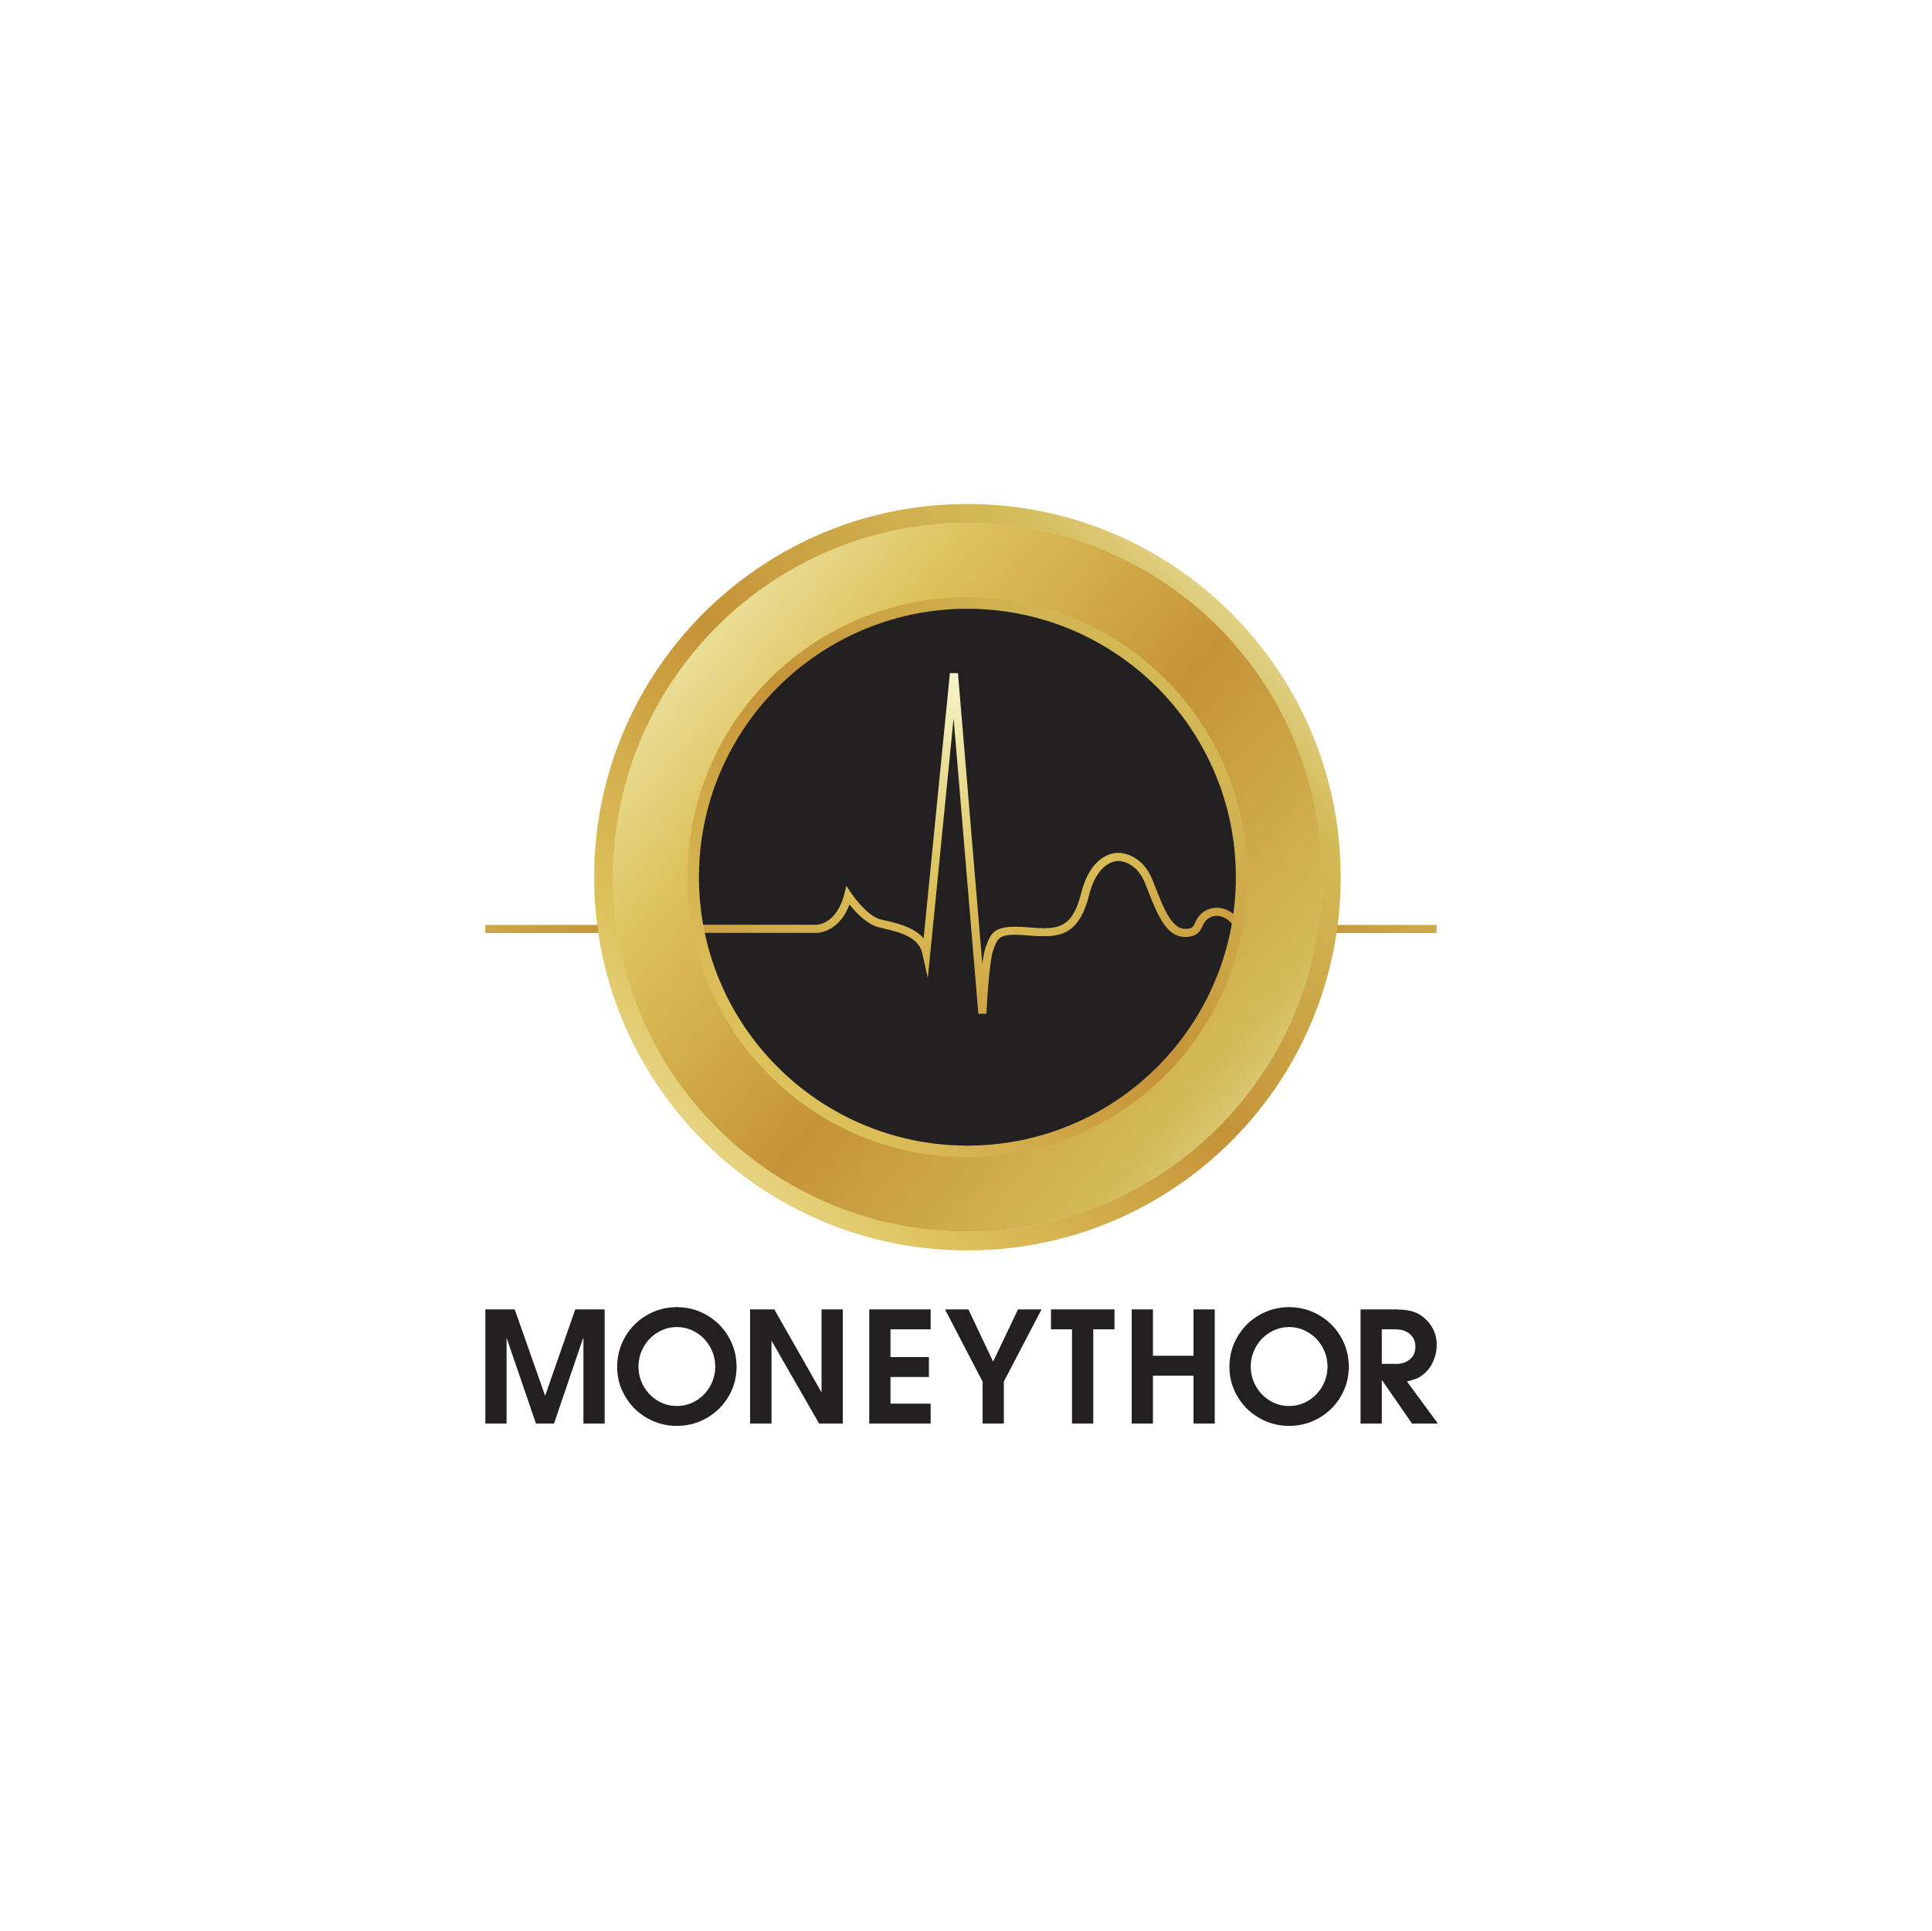 Moneythor logo